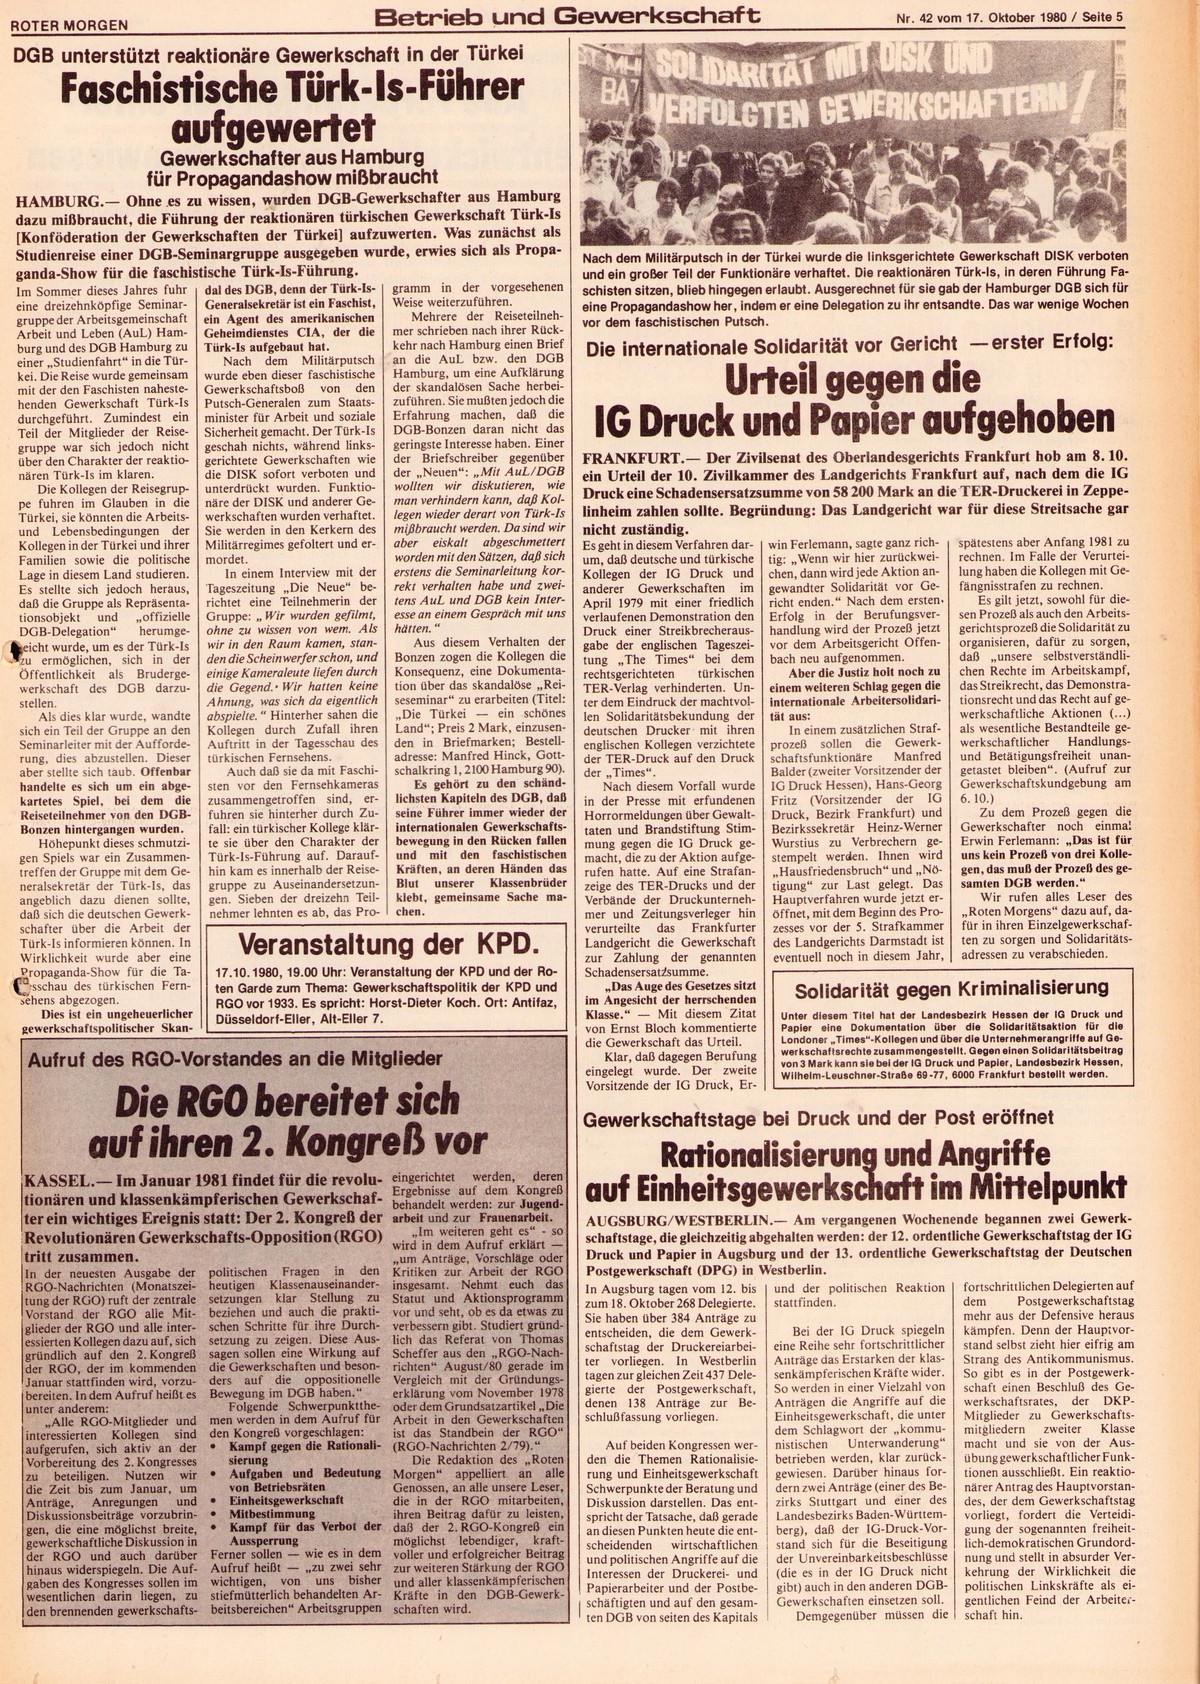 Roter Morgen, 14. Jg., 17. Oktobber 1980, Nr. 42, Seite 5